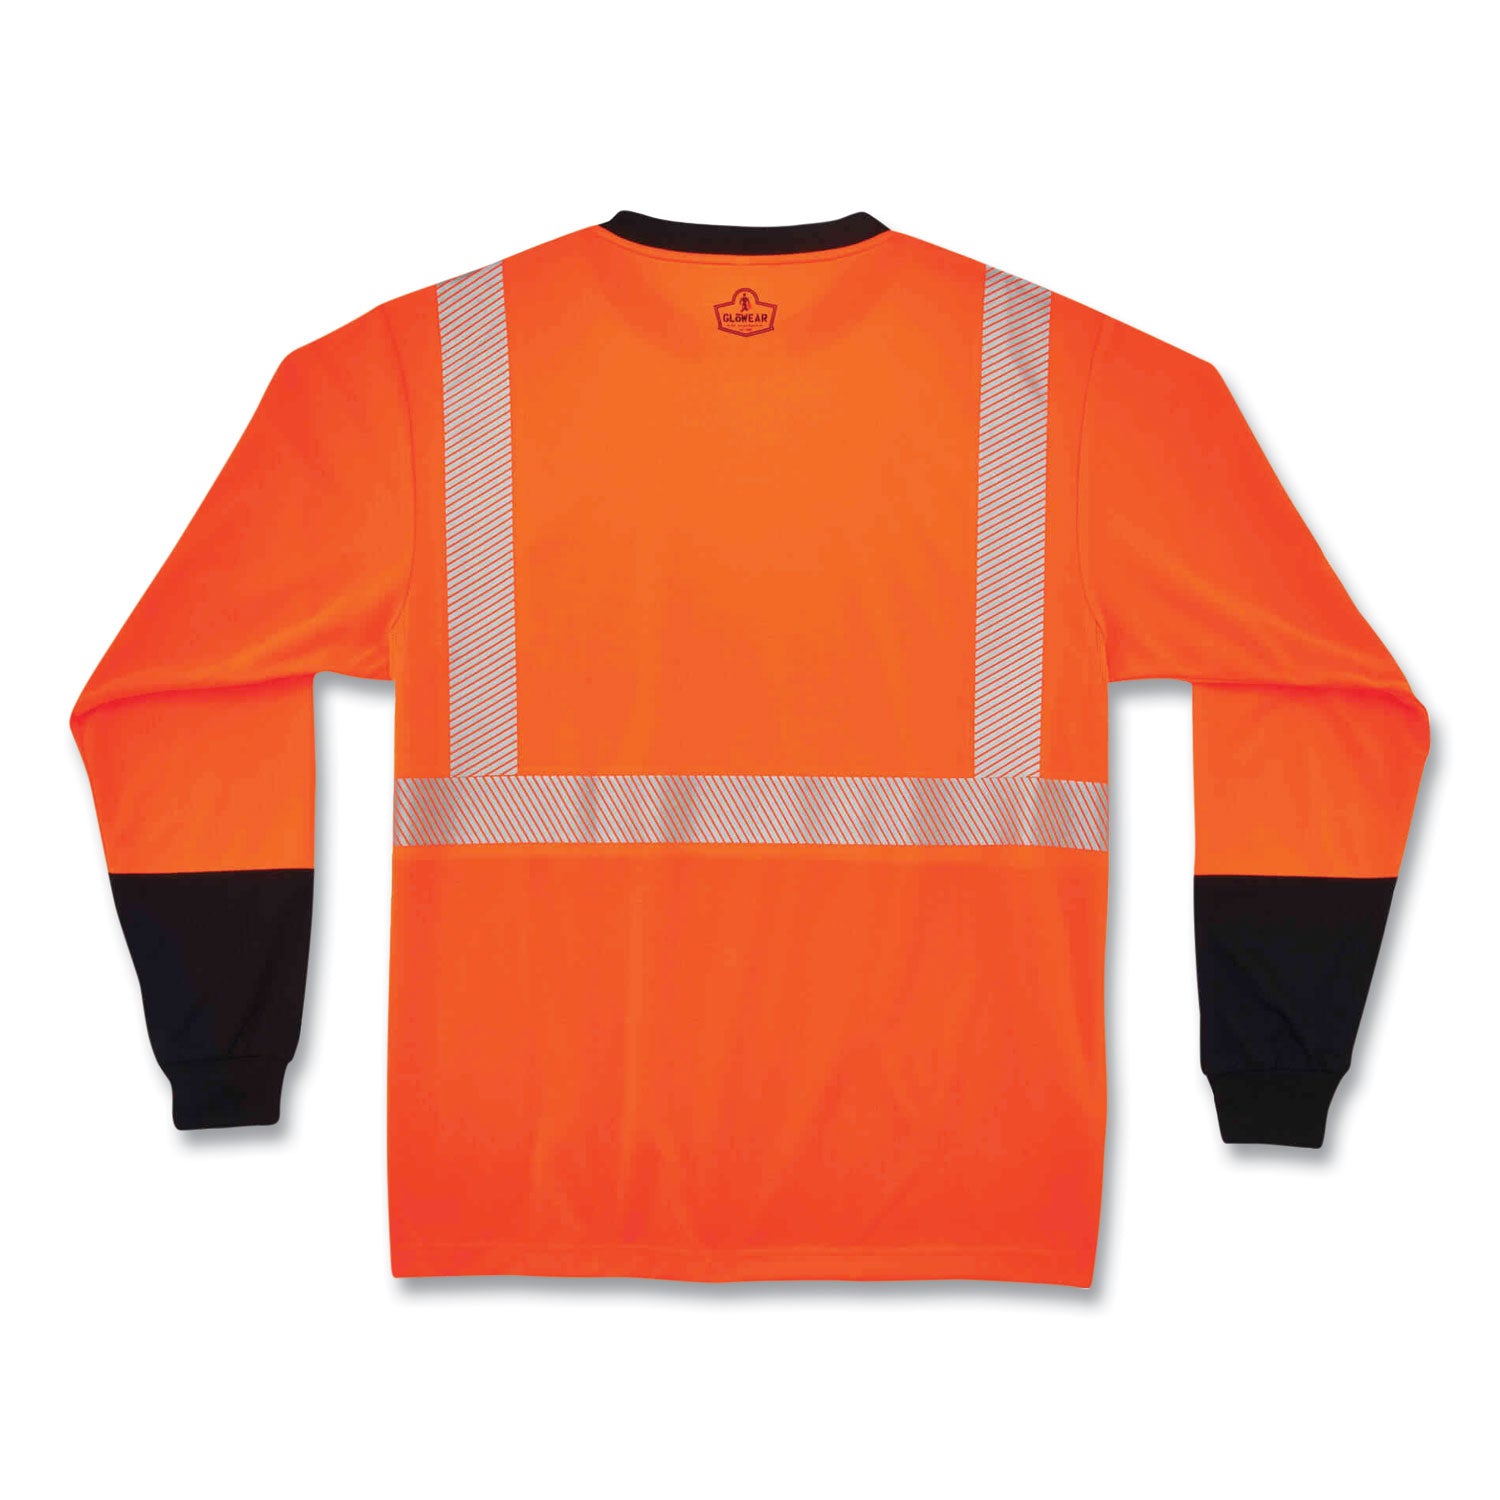 glowear-8281bk-class-2-long-sleeve-shirt-with-black-bottom-polyester-large-orange-ships-in-1-3-business-days_ego22684 - 3